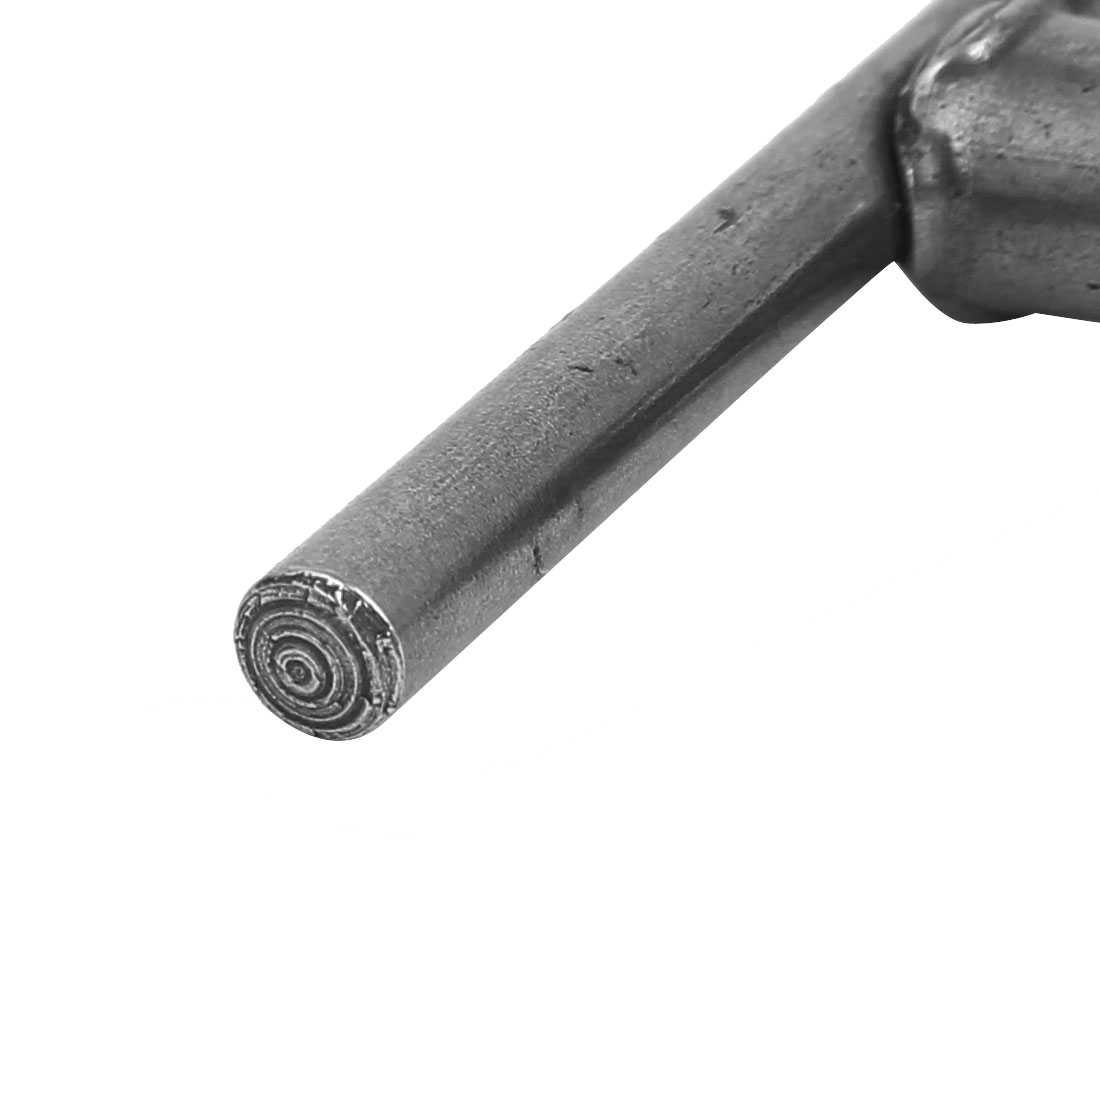 55mmx34mmx5mm Metal 11T Drill Chuck Keys Wrenches Loosen Tighten Tools Gray 2pcs